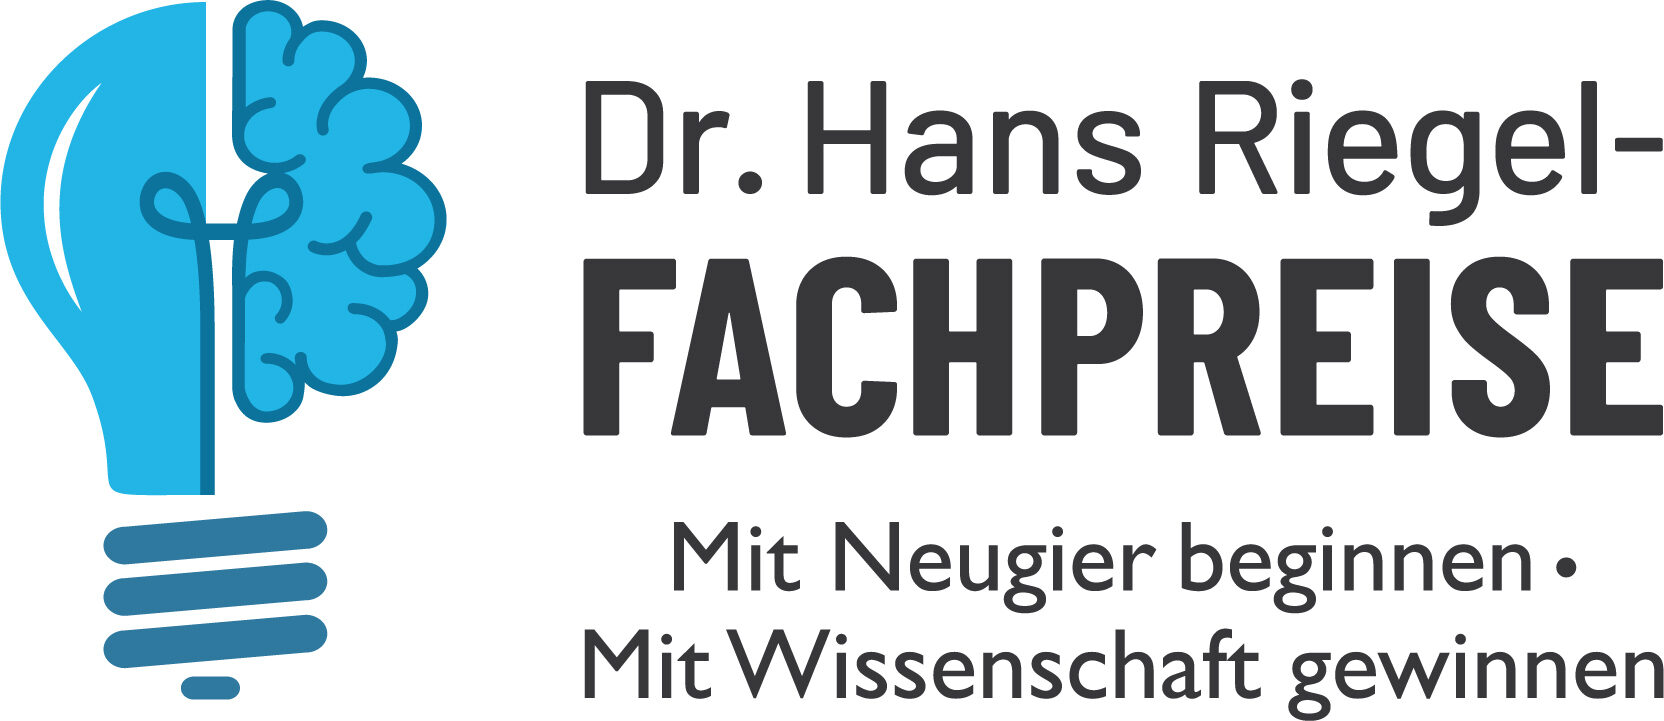 Logo Dr. Hans Riegel-Fachpreise